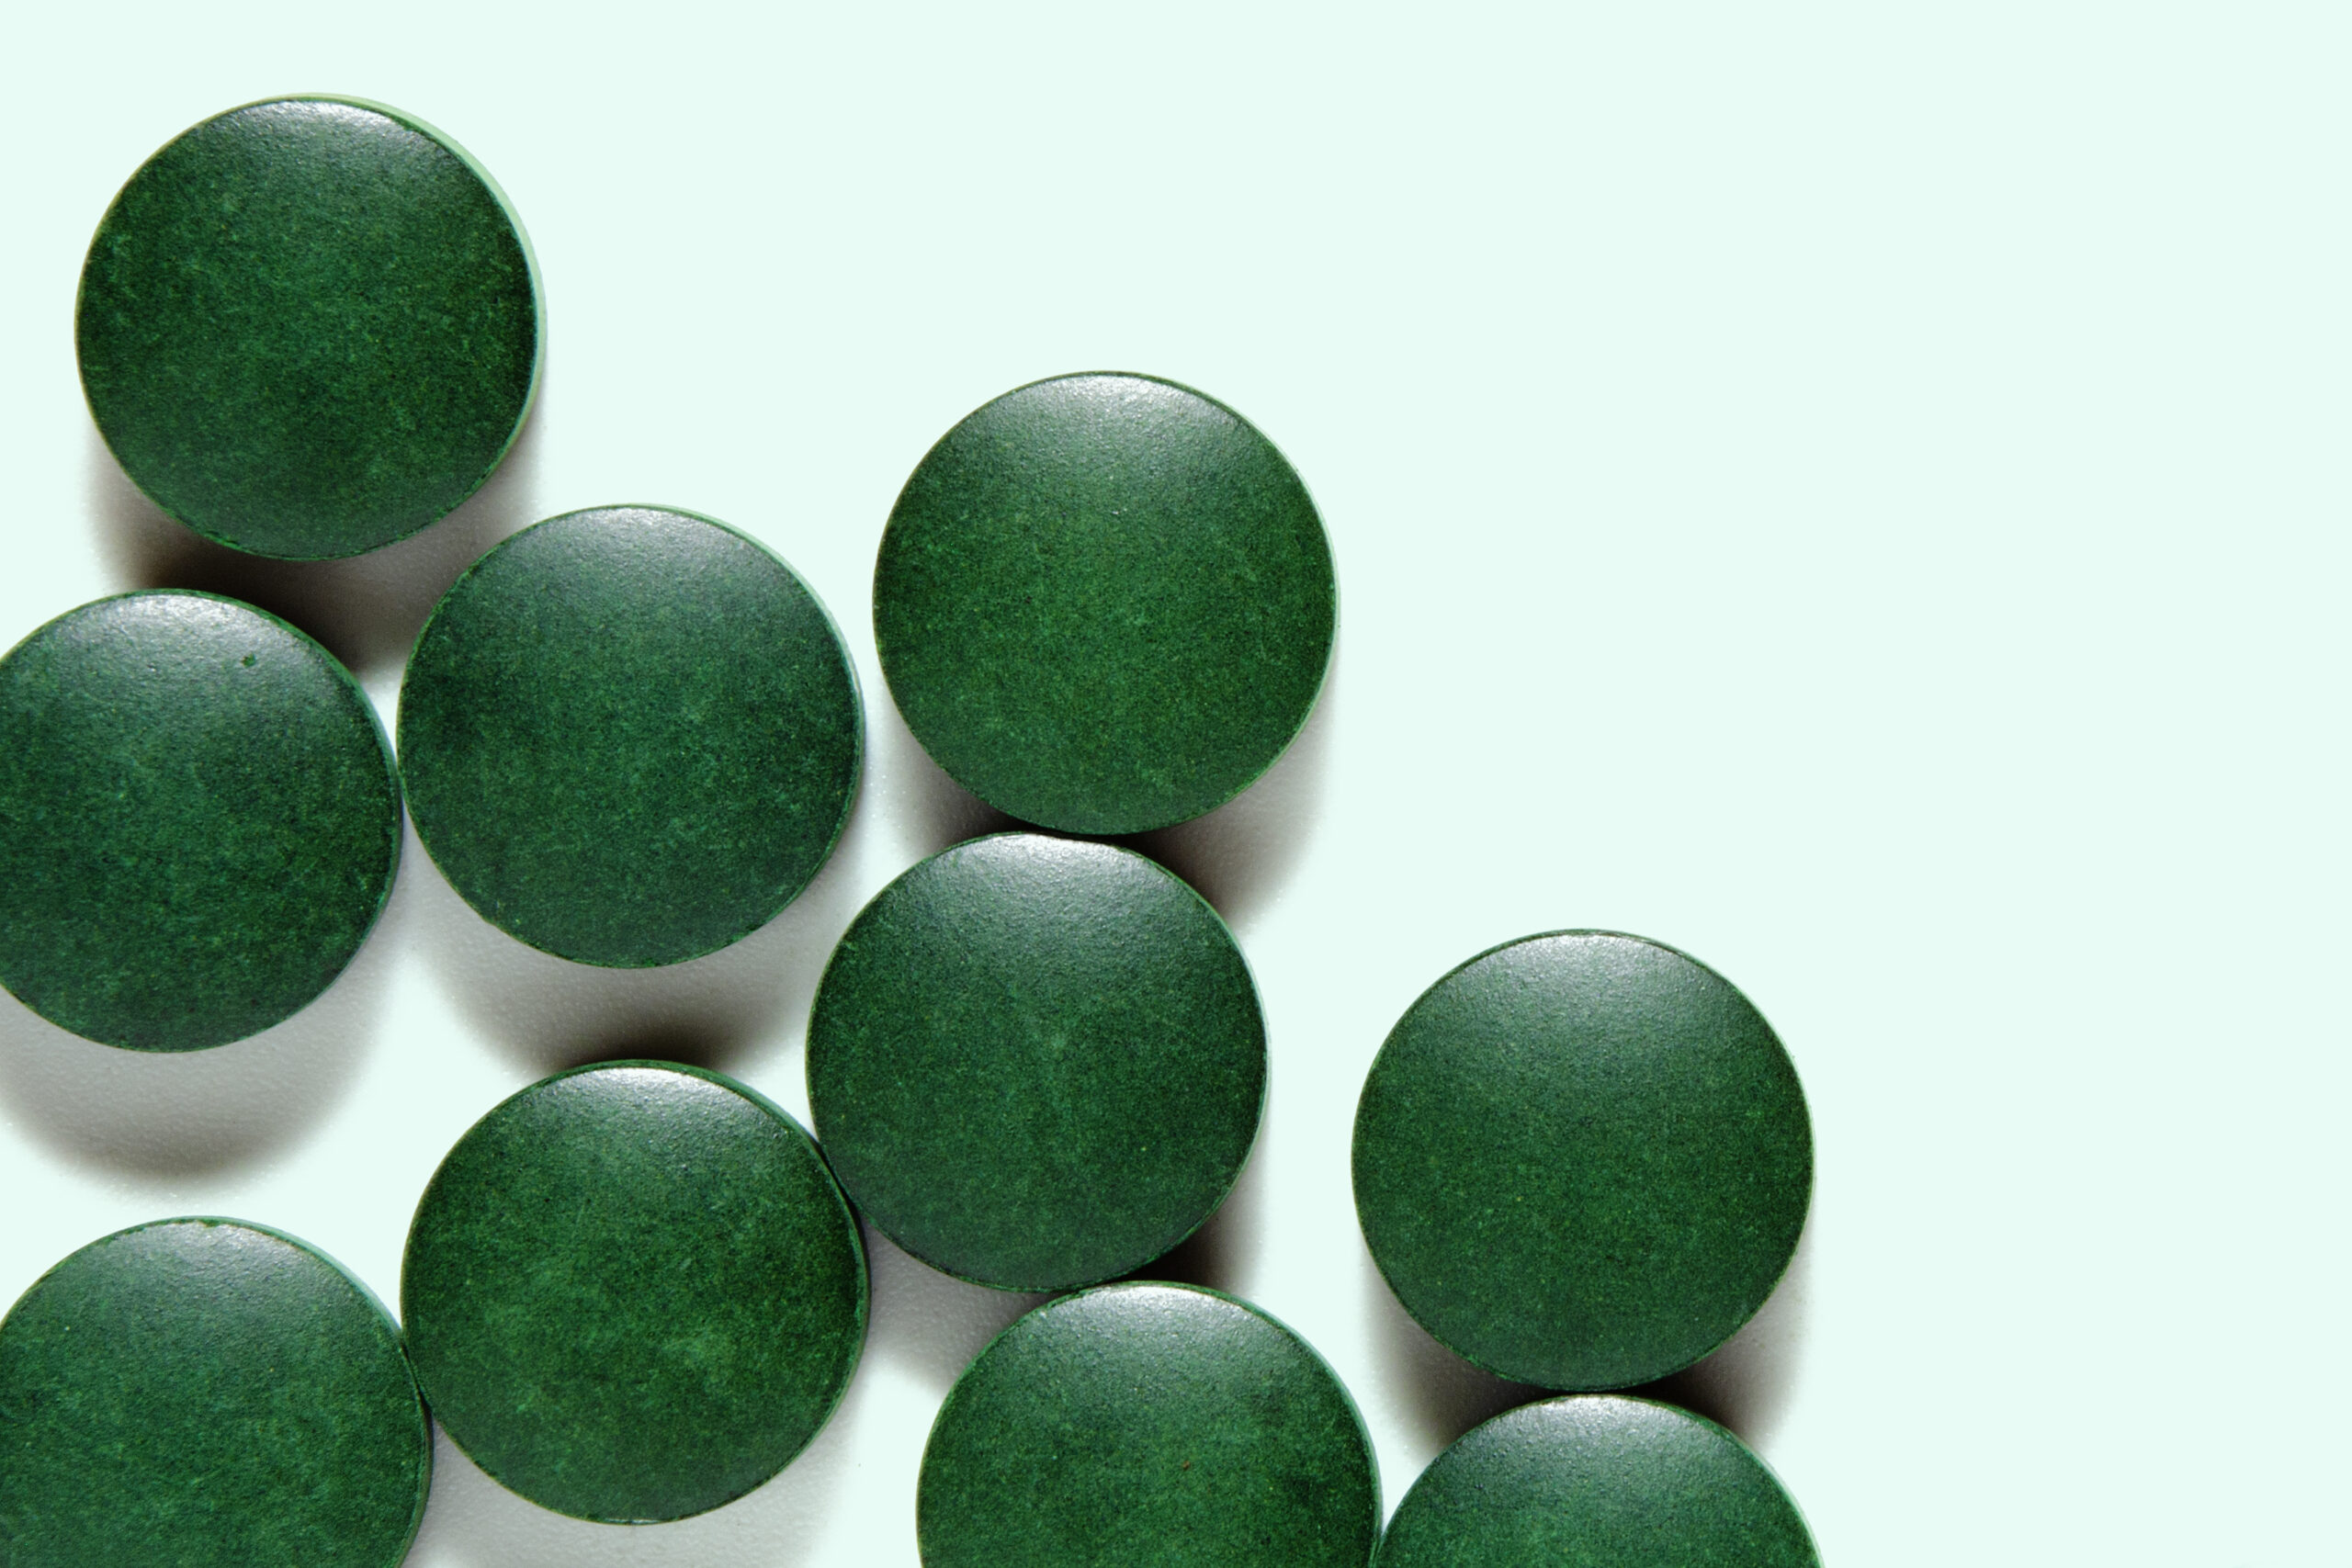 Pack Spirulina – Comprimidos X3 – Eat & Green